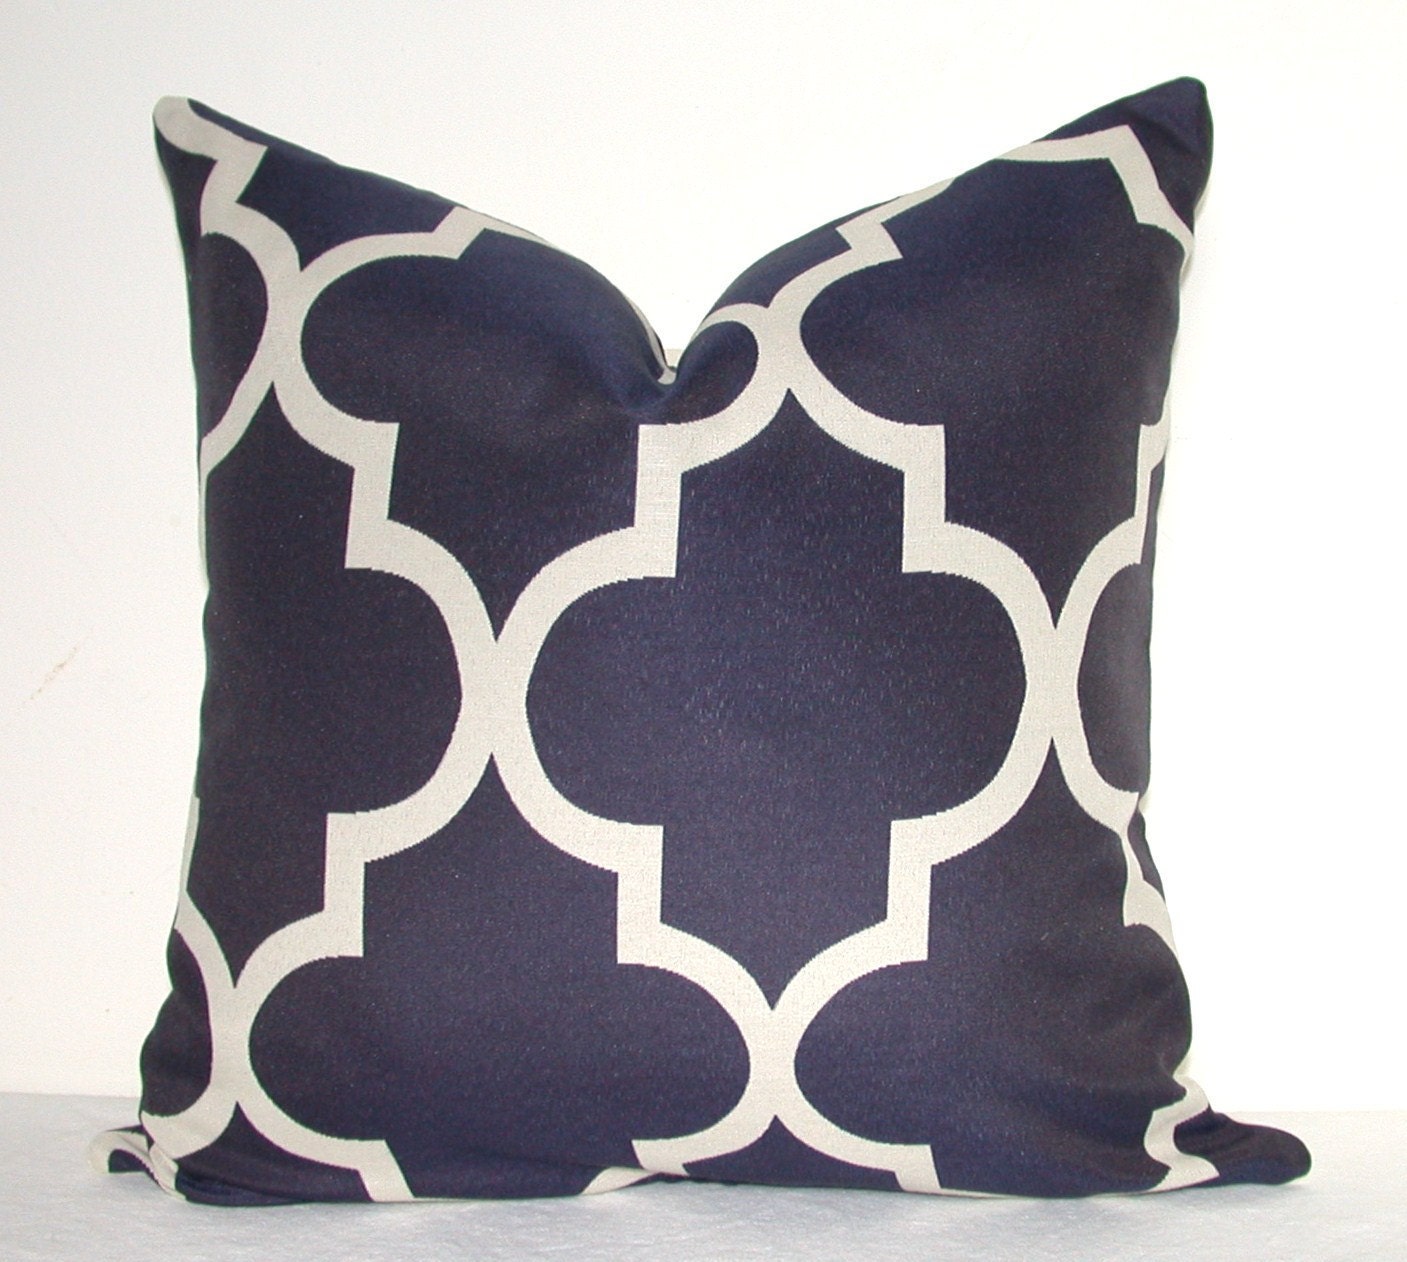 Pillow Covers - Decorative Pillows - Sofa Pillows - Throw Pillows - Navy - Both Sides - Set of Two - 18x18 in - Lattice - Trellis